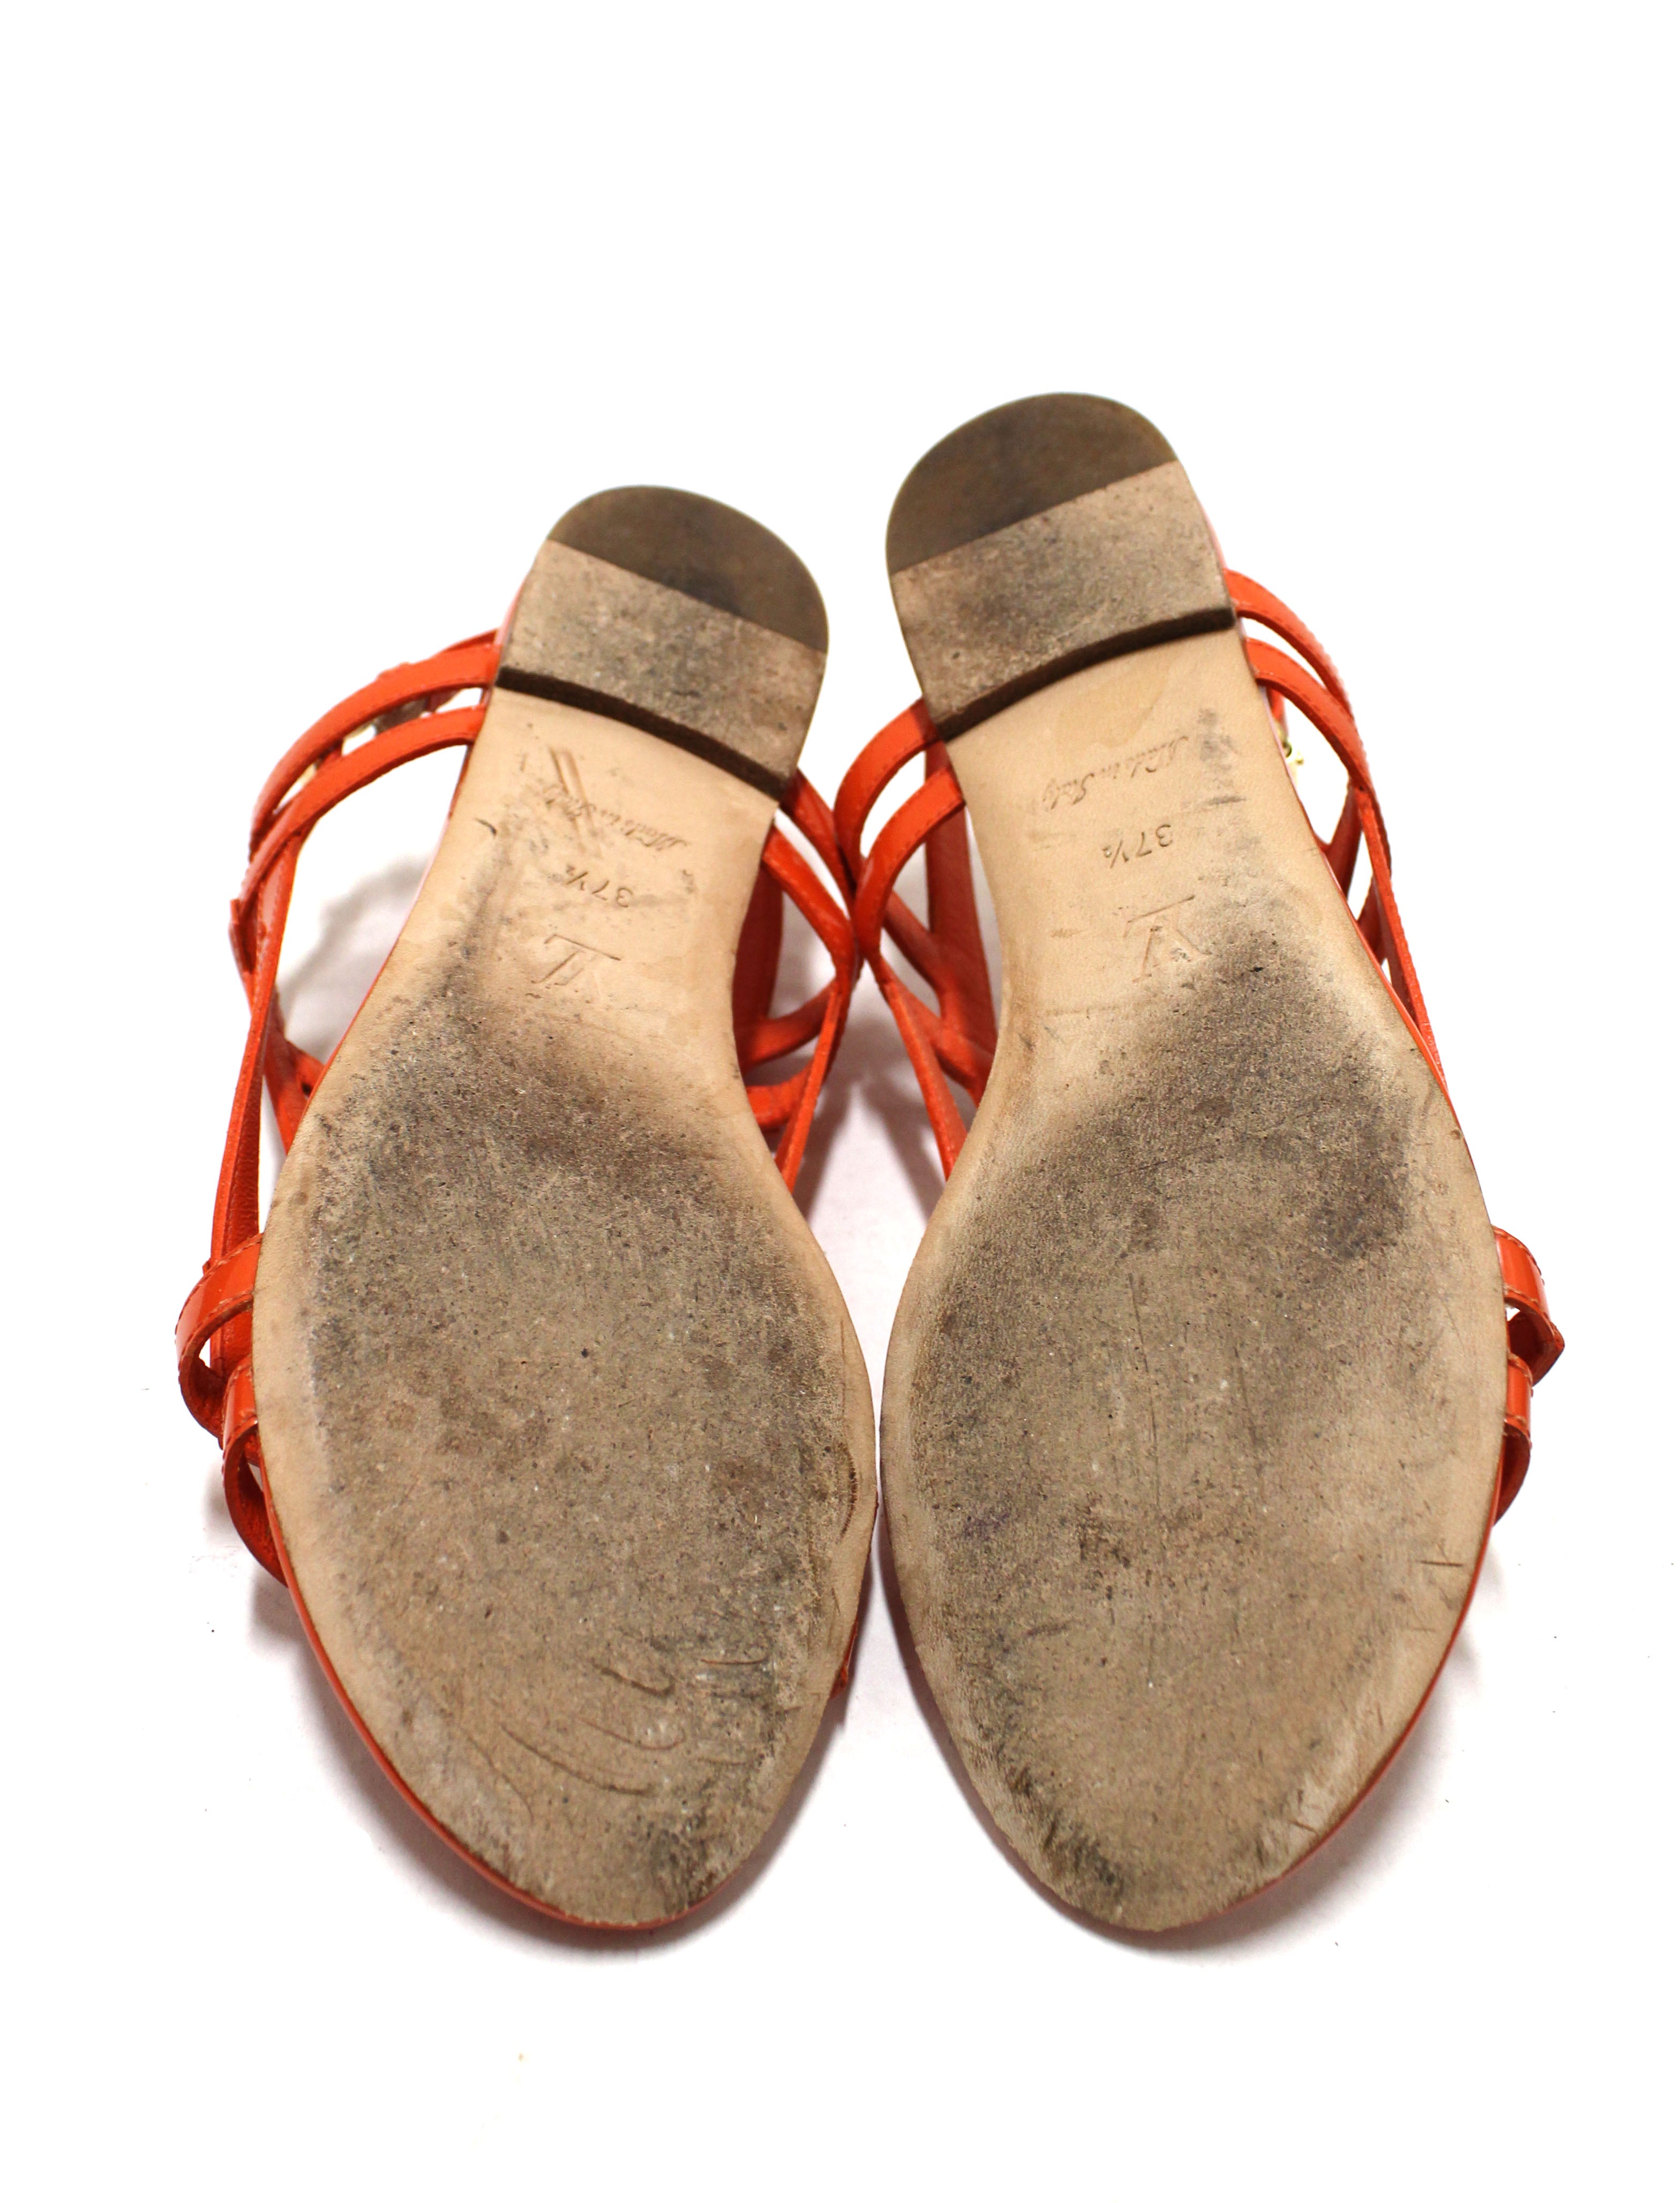 Louis Vuitton Multicolor Patent Leather Strappy Flat Sandals Size